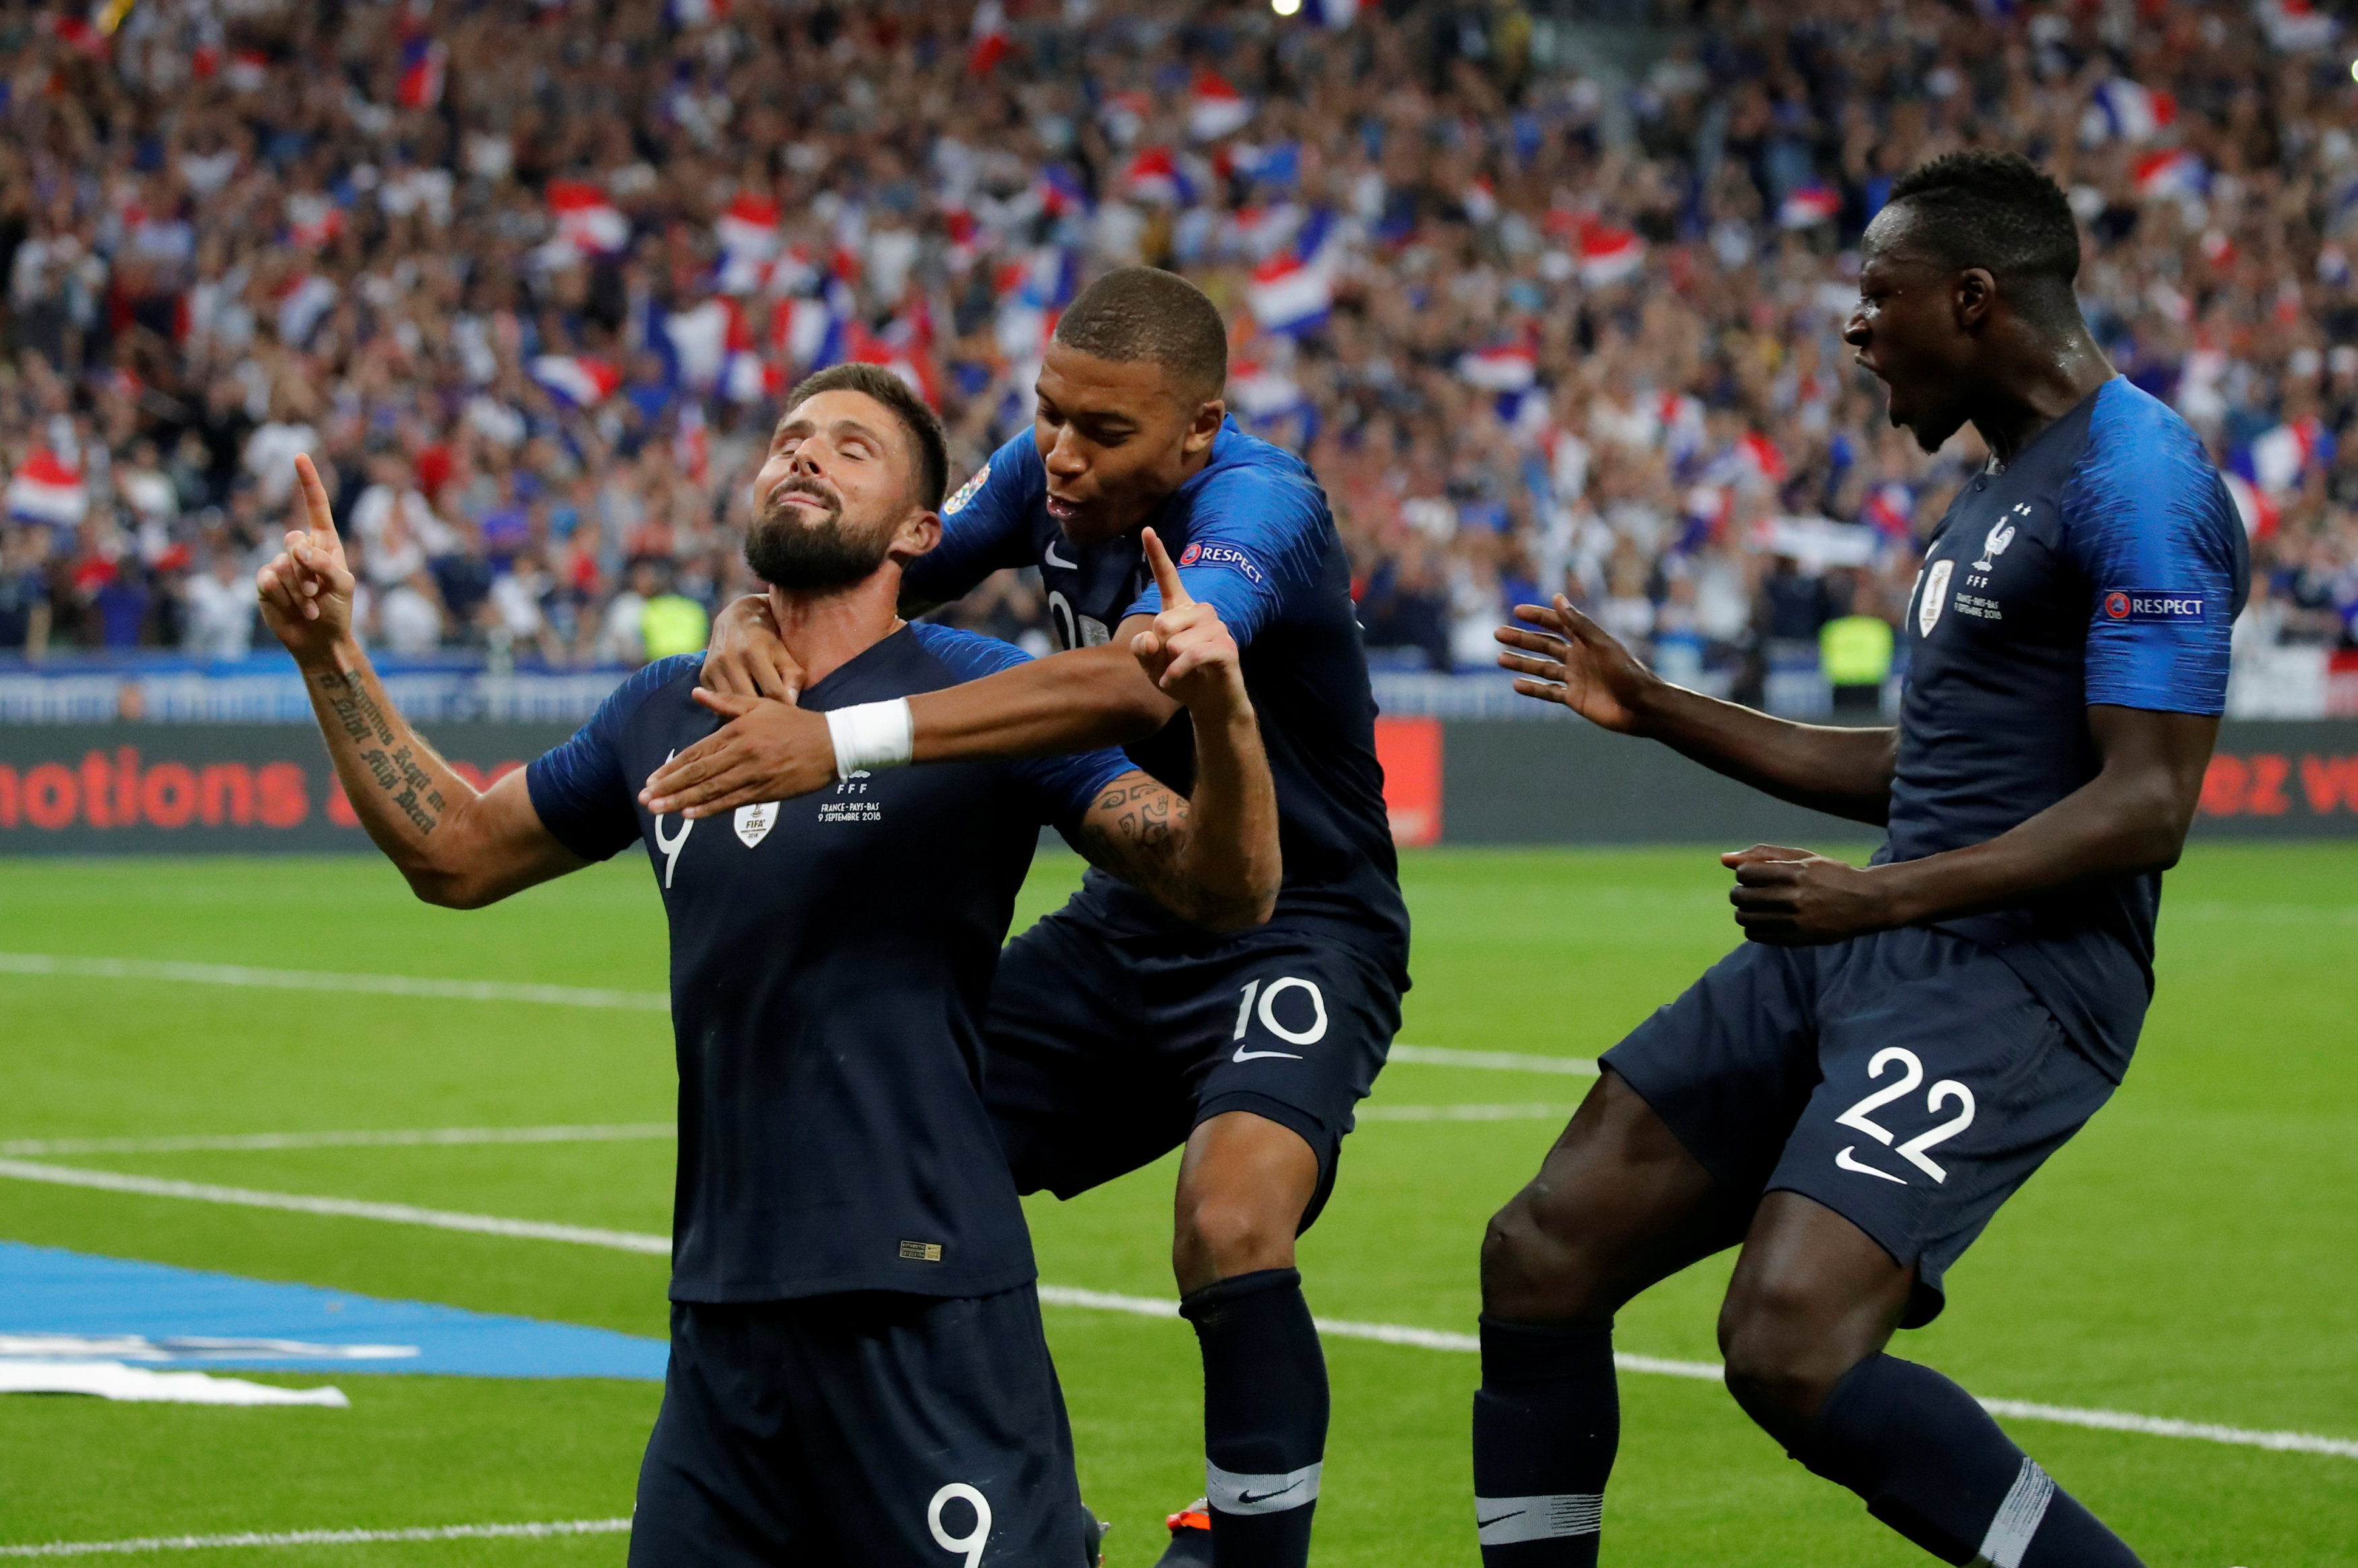 Football: France's Giroud ends goal drought with winner over Dutch